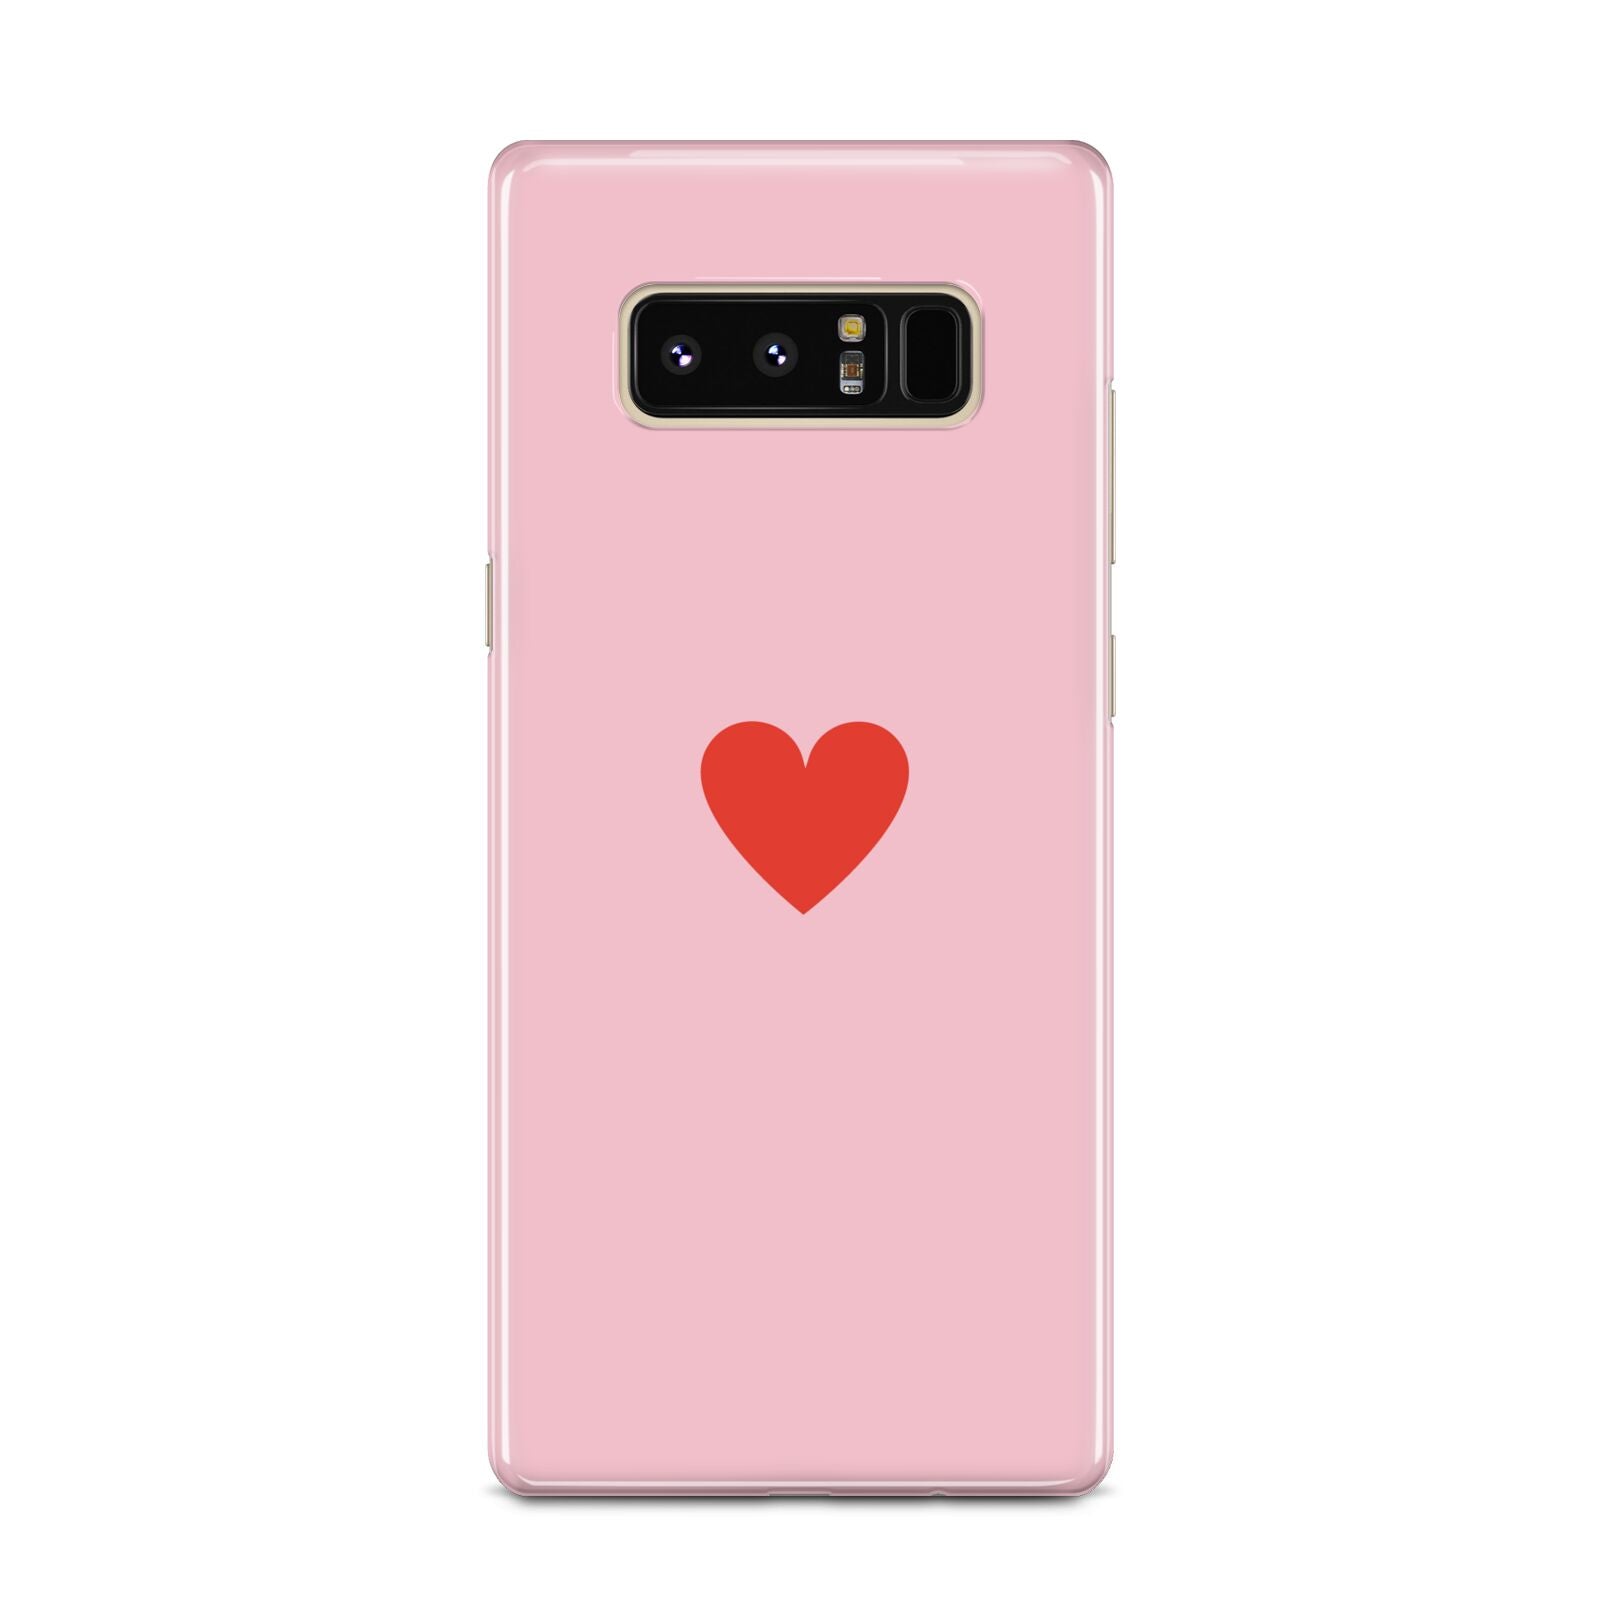 Red Heart Samsung Galaxy Note 8 Case